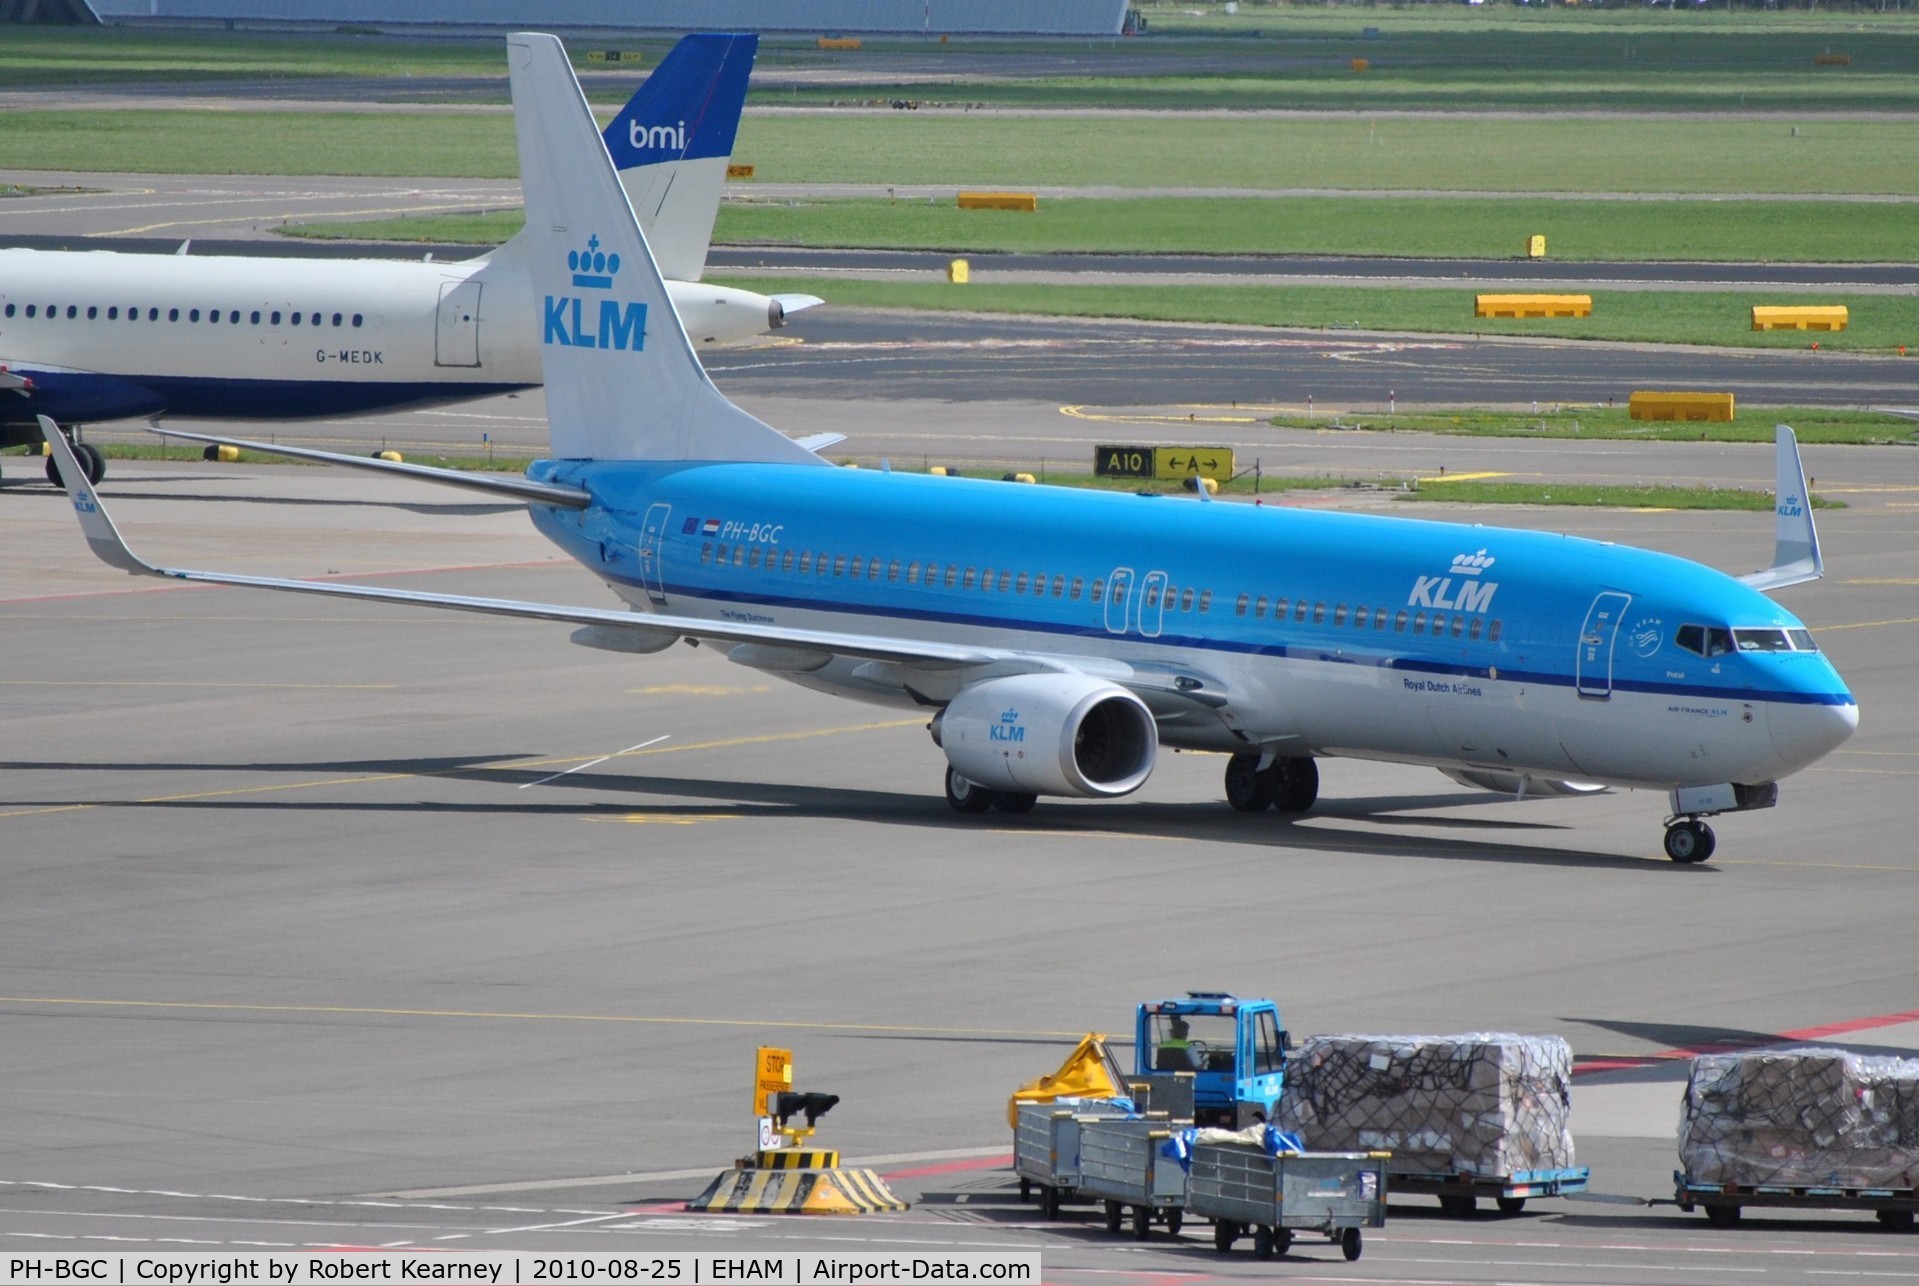 PH-BGC, 2008 Boeing 737-8K2 C/N 30361, KLM turning onto stand